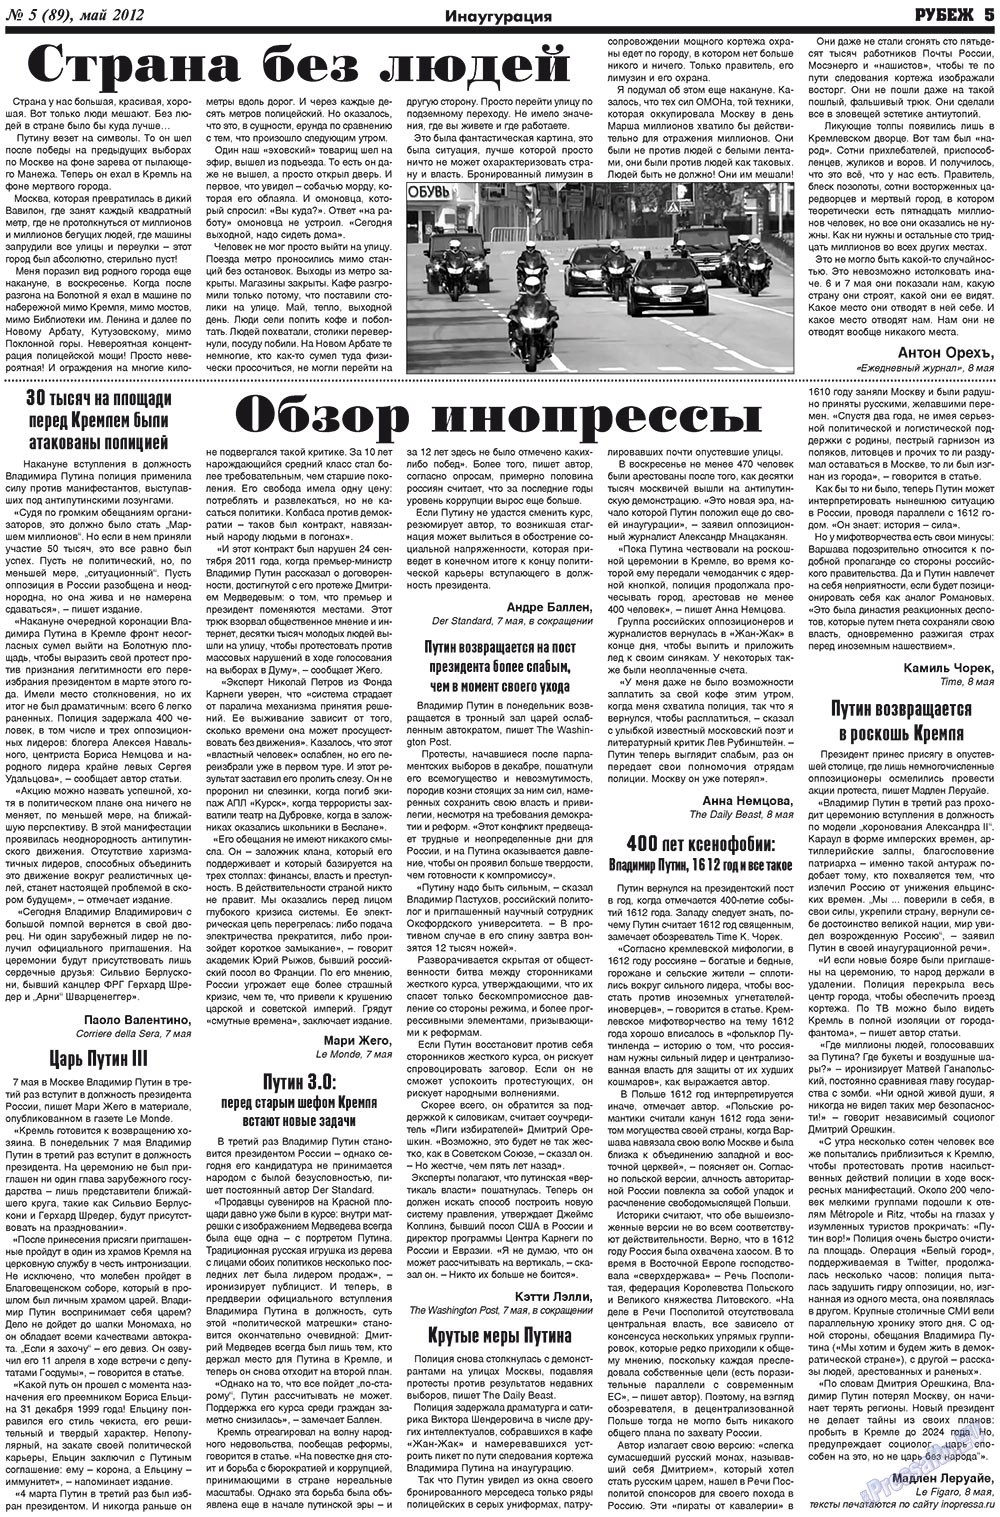 Рубеж, газета. 2012 №5 стр.5